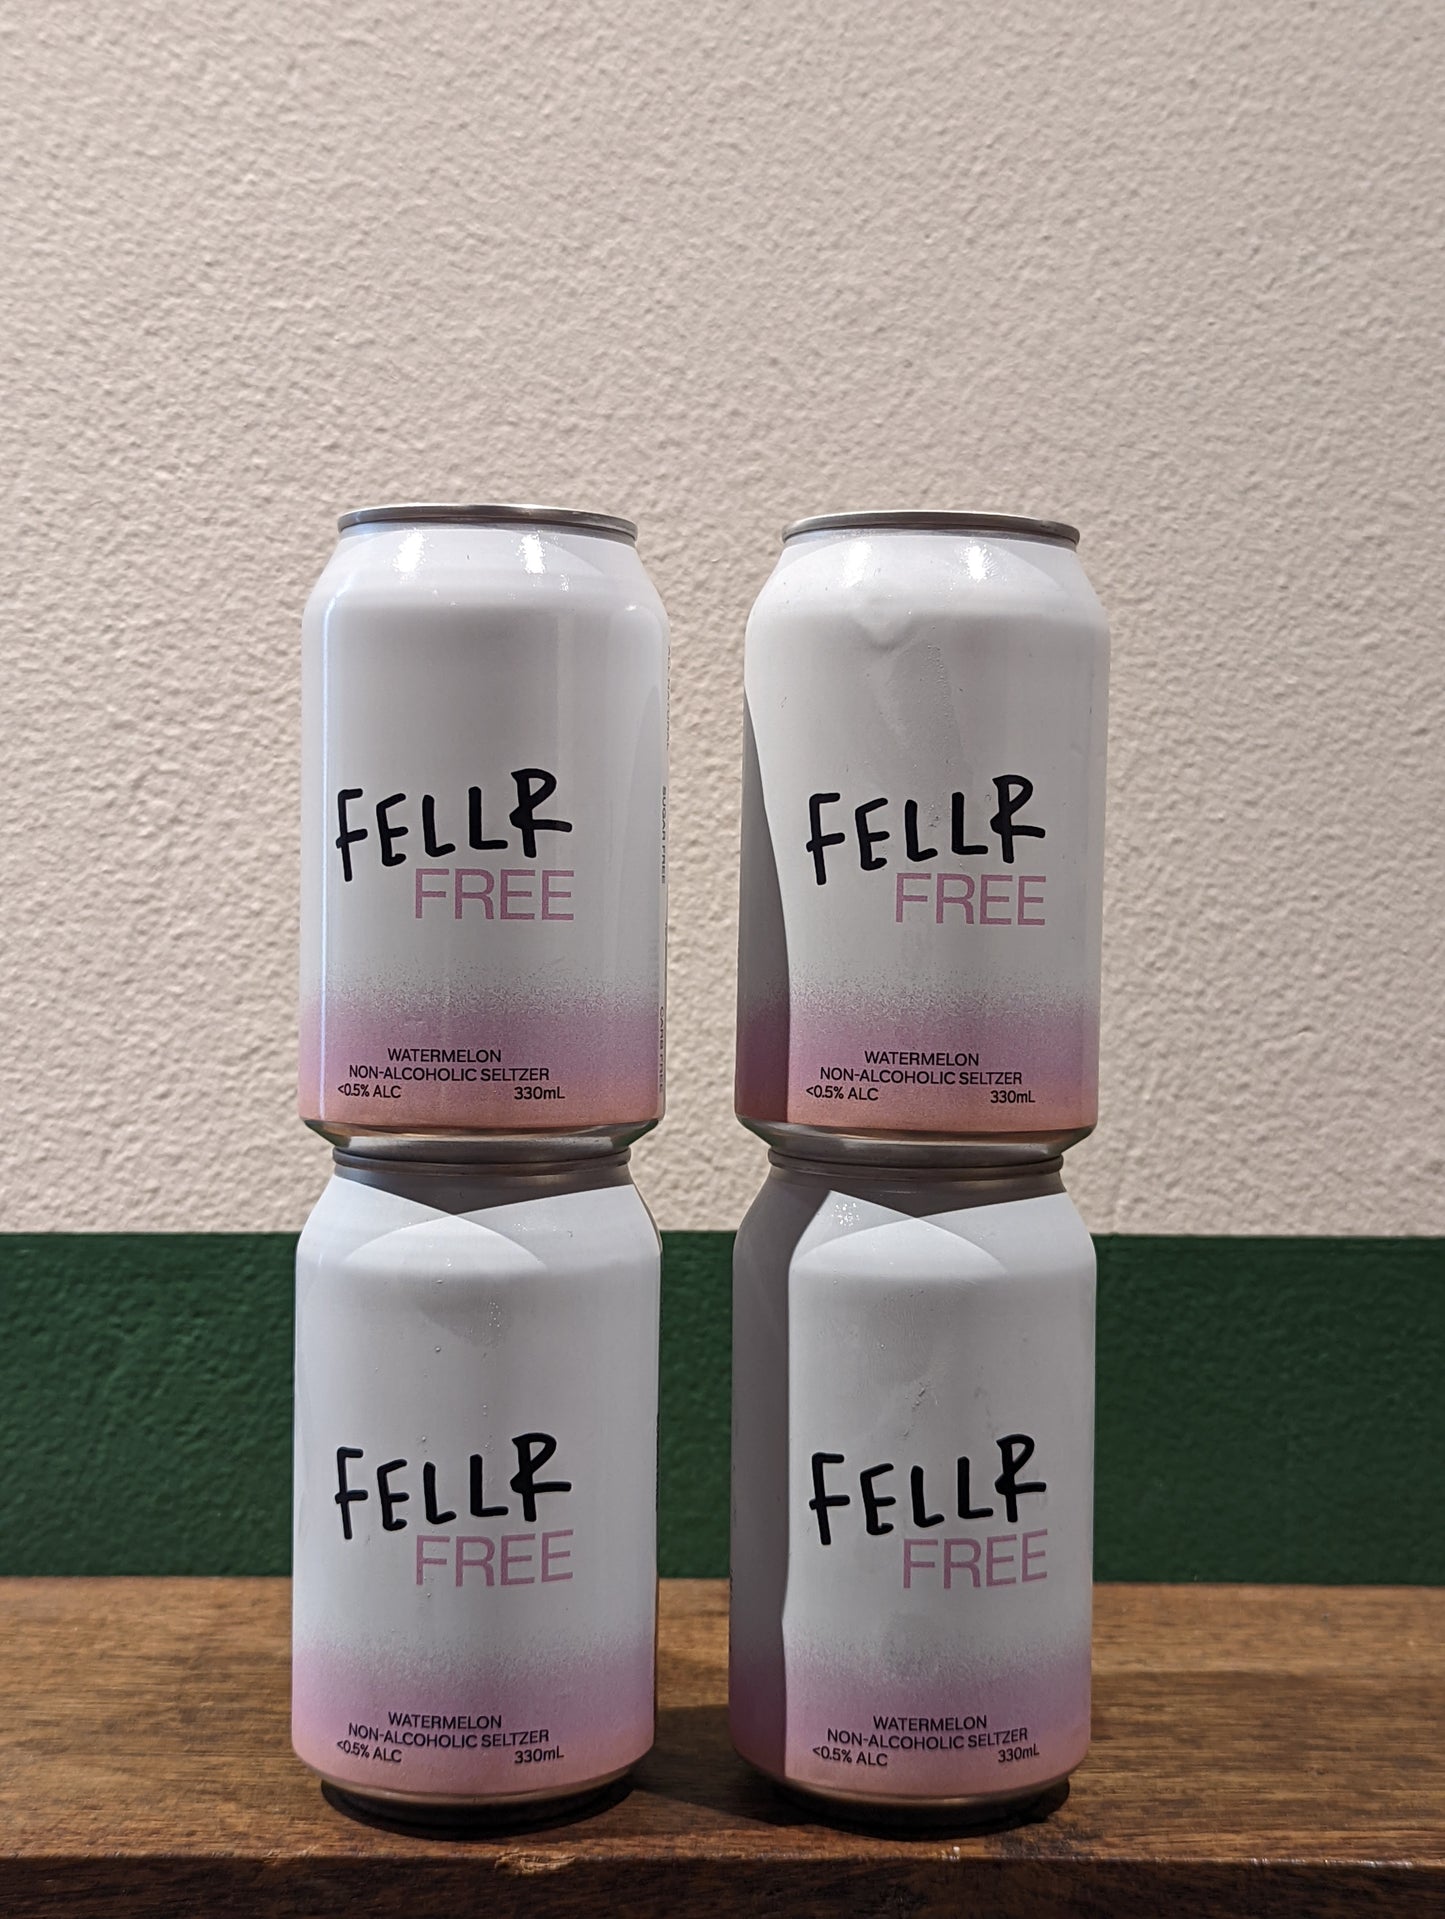 Fellr FREE - Non-Alcoholic Watermelon Seltzer